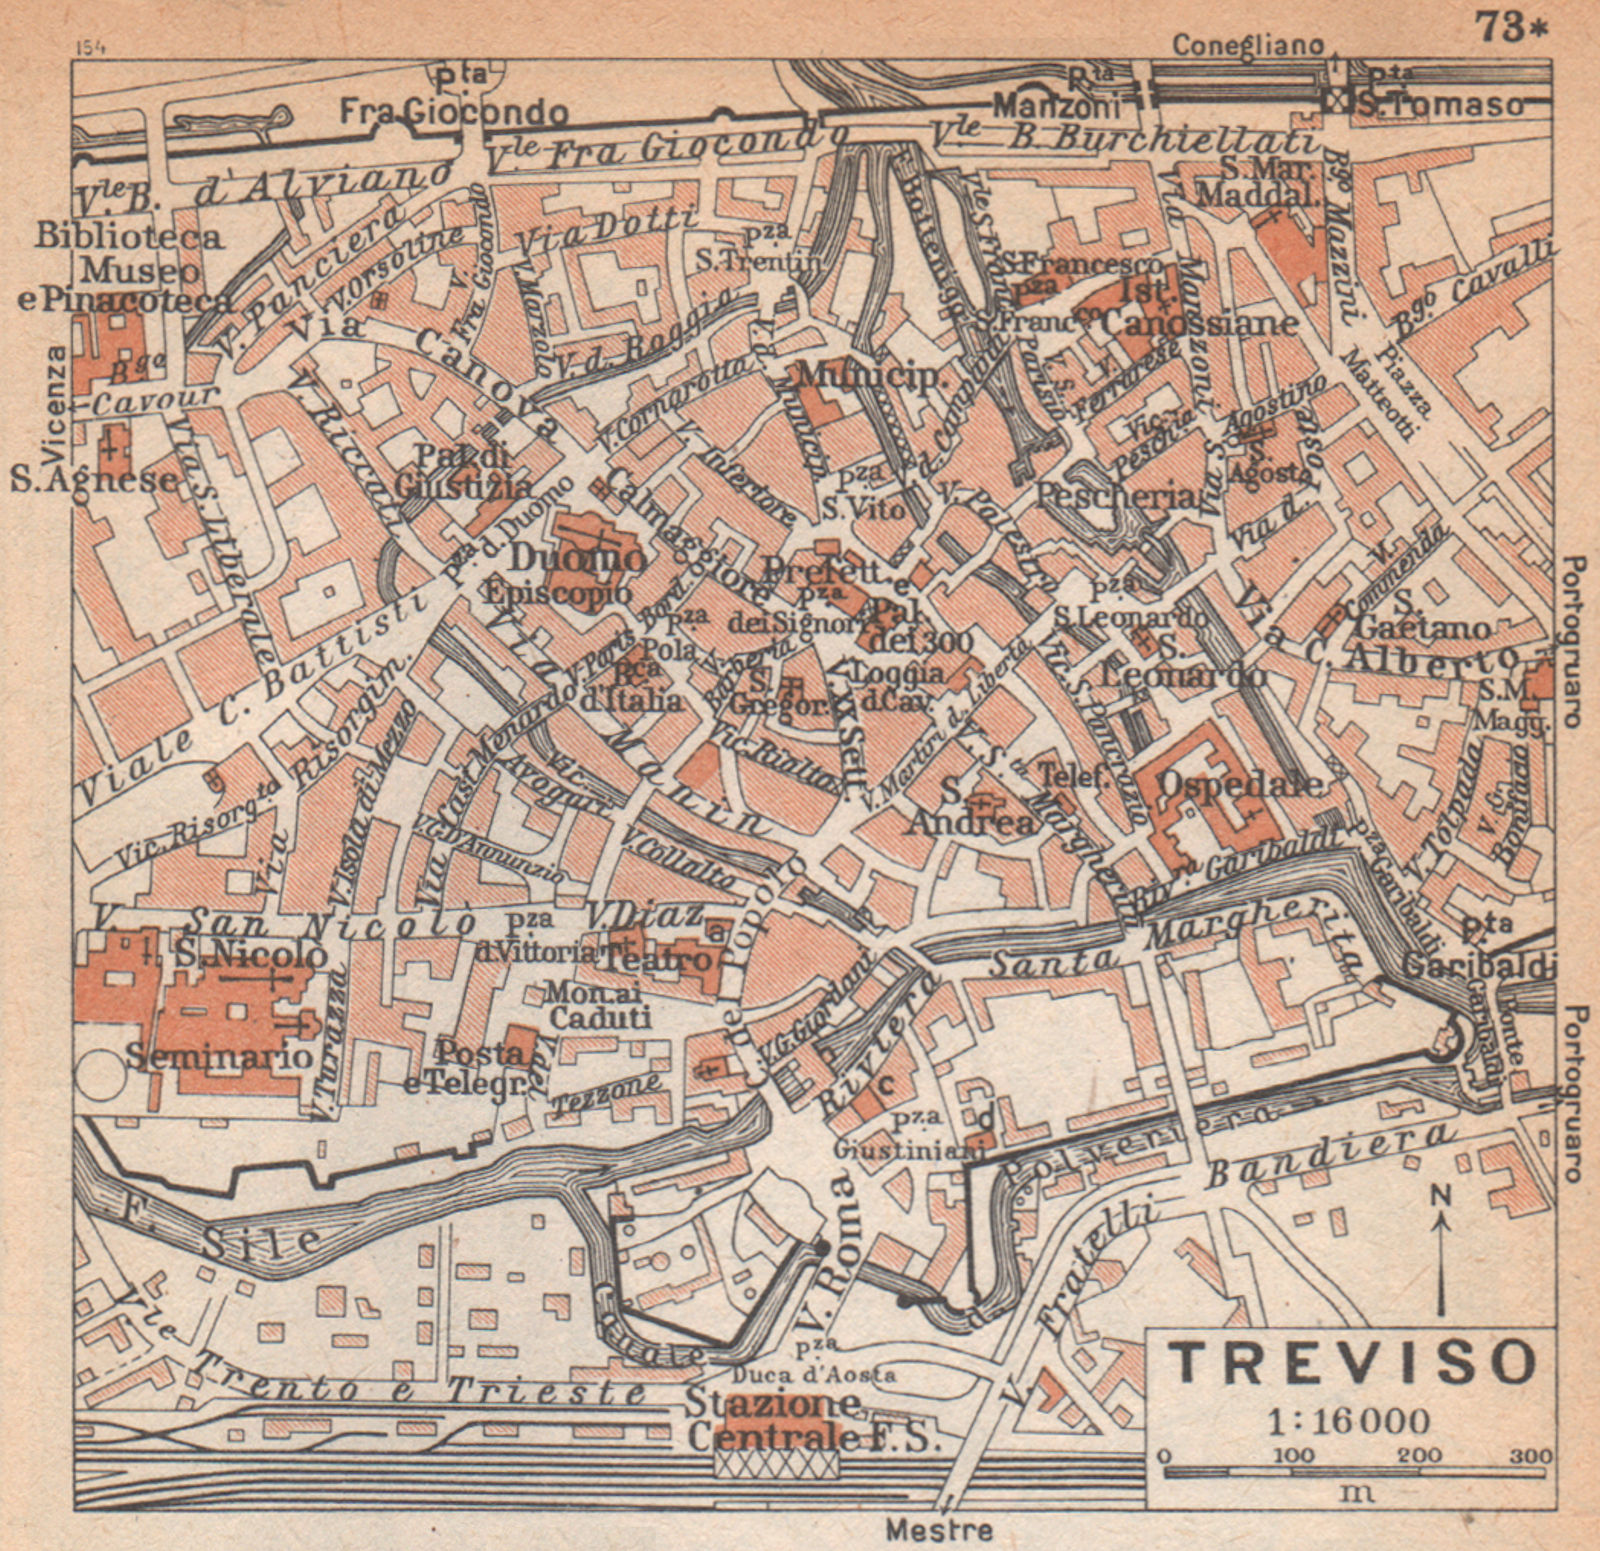 Associate Product TREVISO vintage town city map plan pianta della città. Italy 1958 old